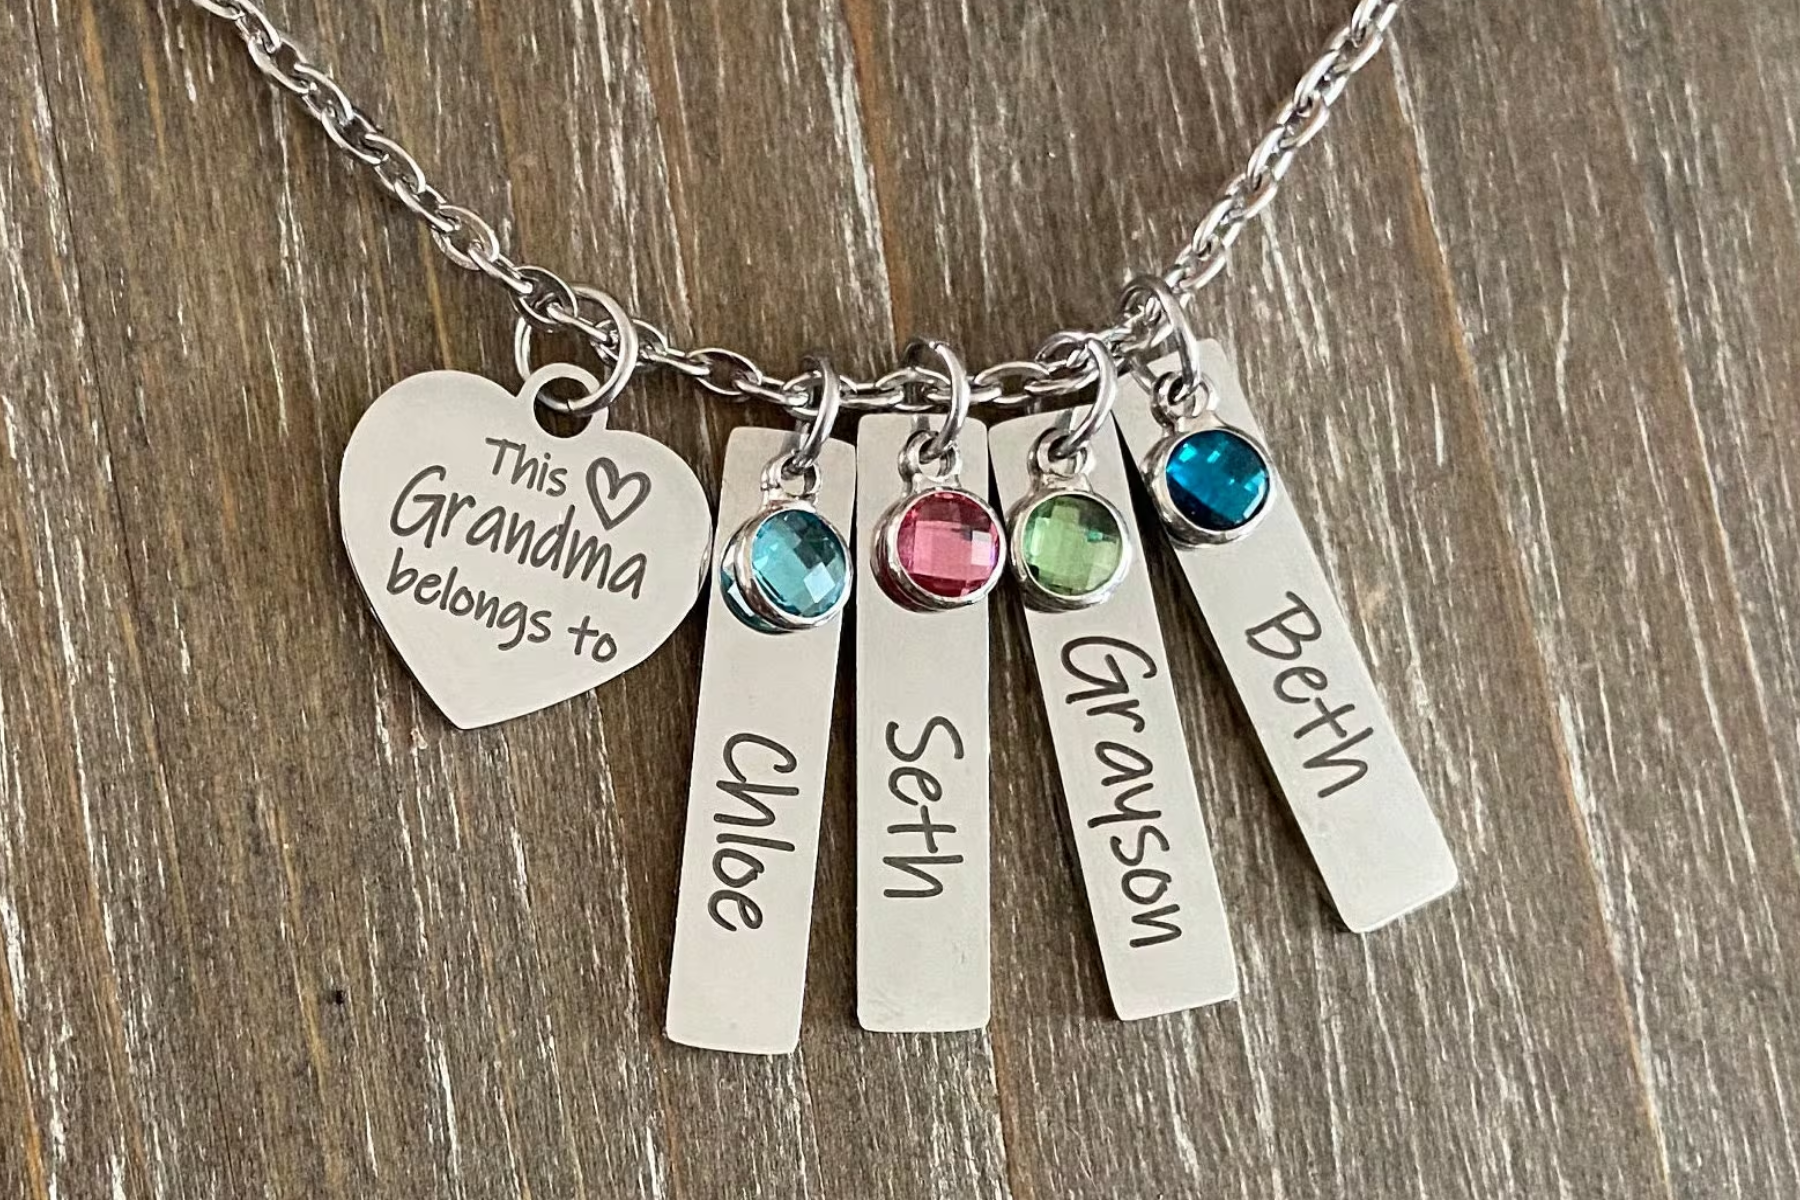 A set of pendants for Grandma and the grandchildren